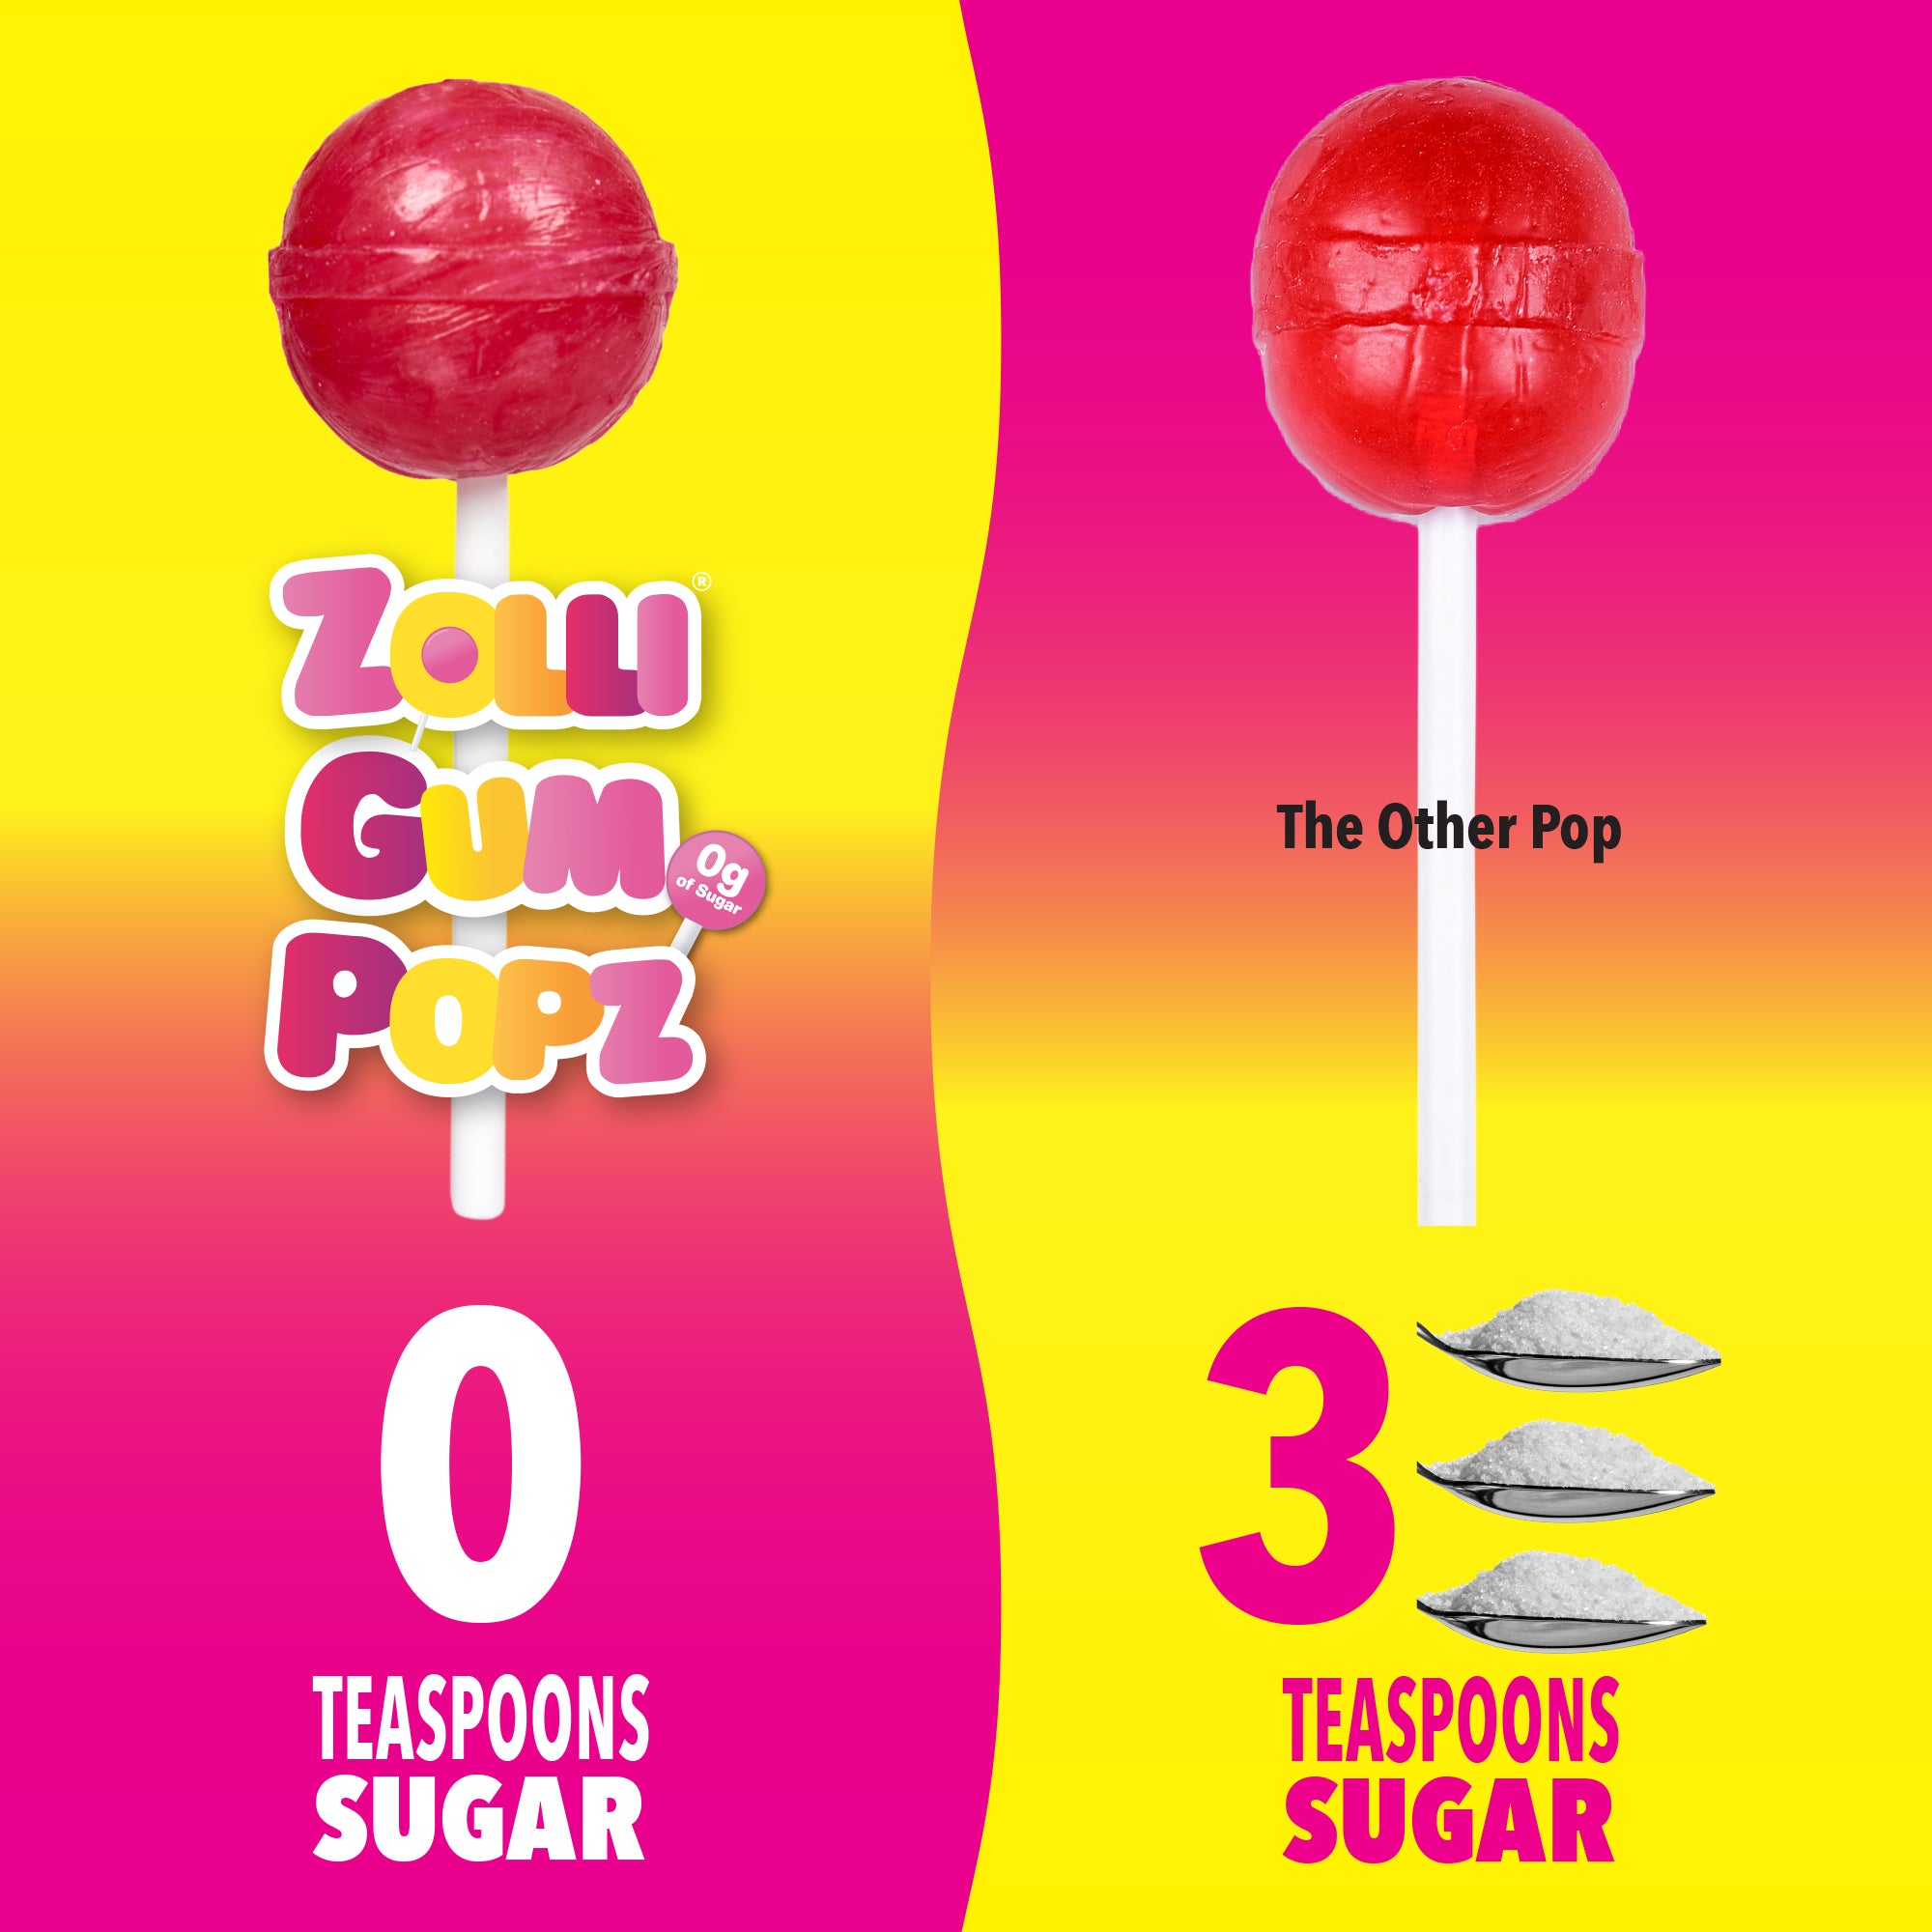 Zolli Gum Popz have 0 teaspoons of sugar. Competing gum pop lollipops have 3 teaspoons of sugar.